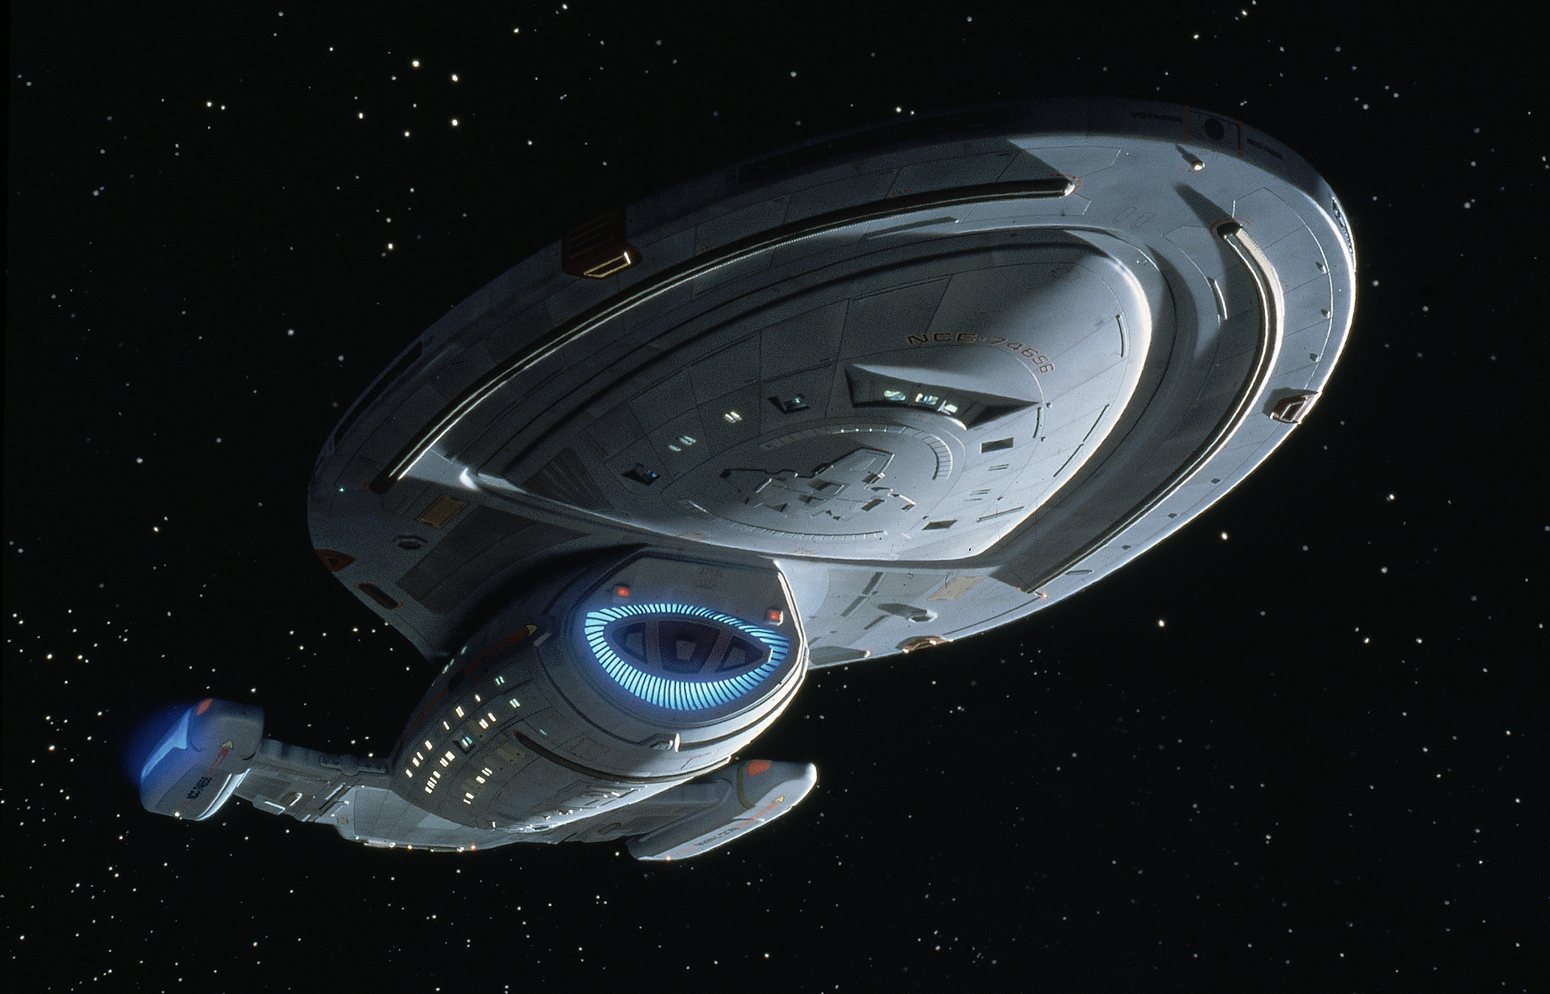 Star Trek: Voyager High Quality Background on Wallpapers Vista